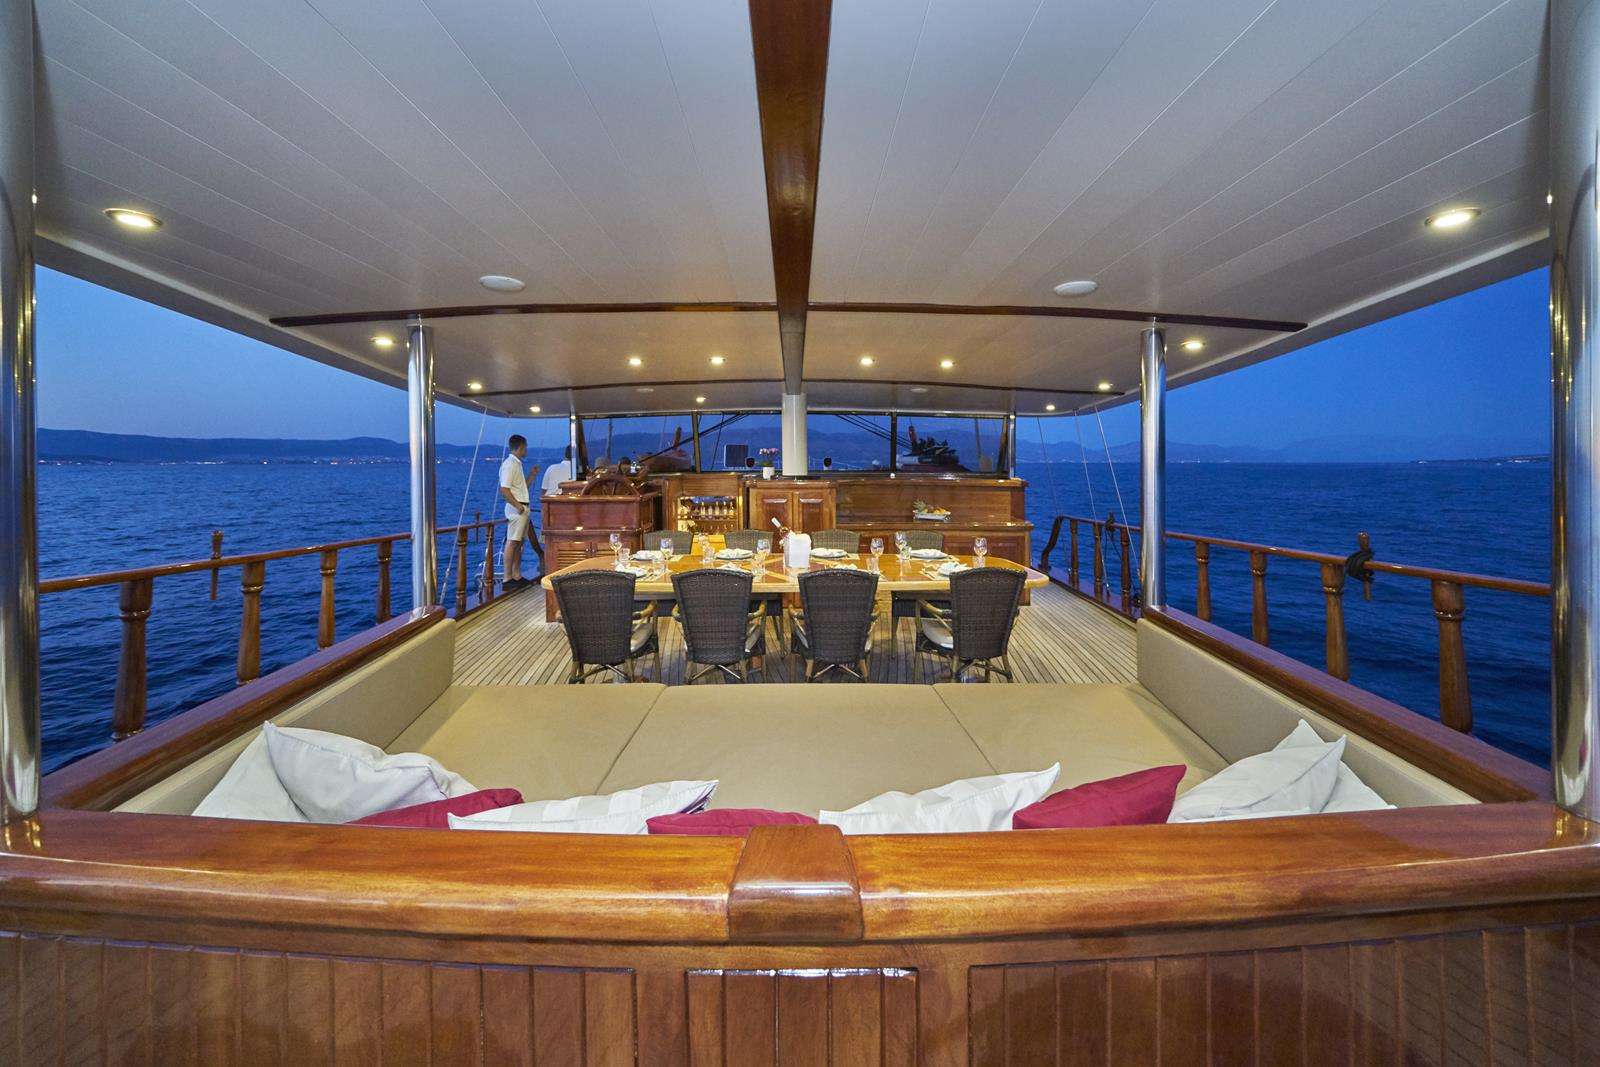 Motor Sailing Yacht 'MORNING STAR', 12 PAX, 4 Crew, 88.00 Ft, 27.00 Meters, Built 2008, Gulet, Refit Year 2021